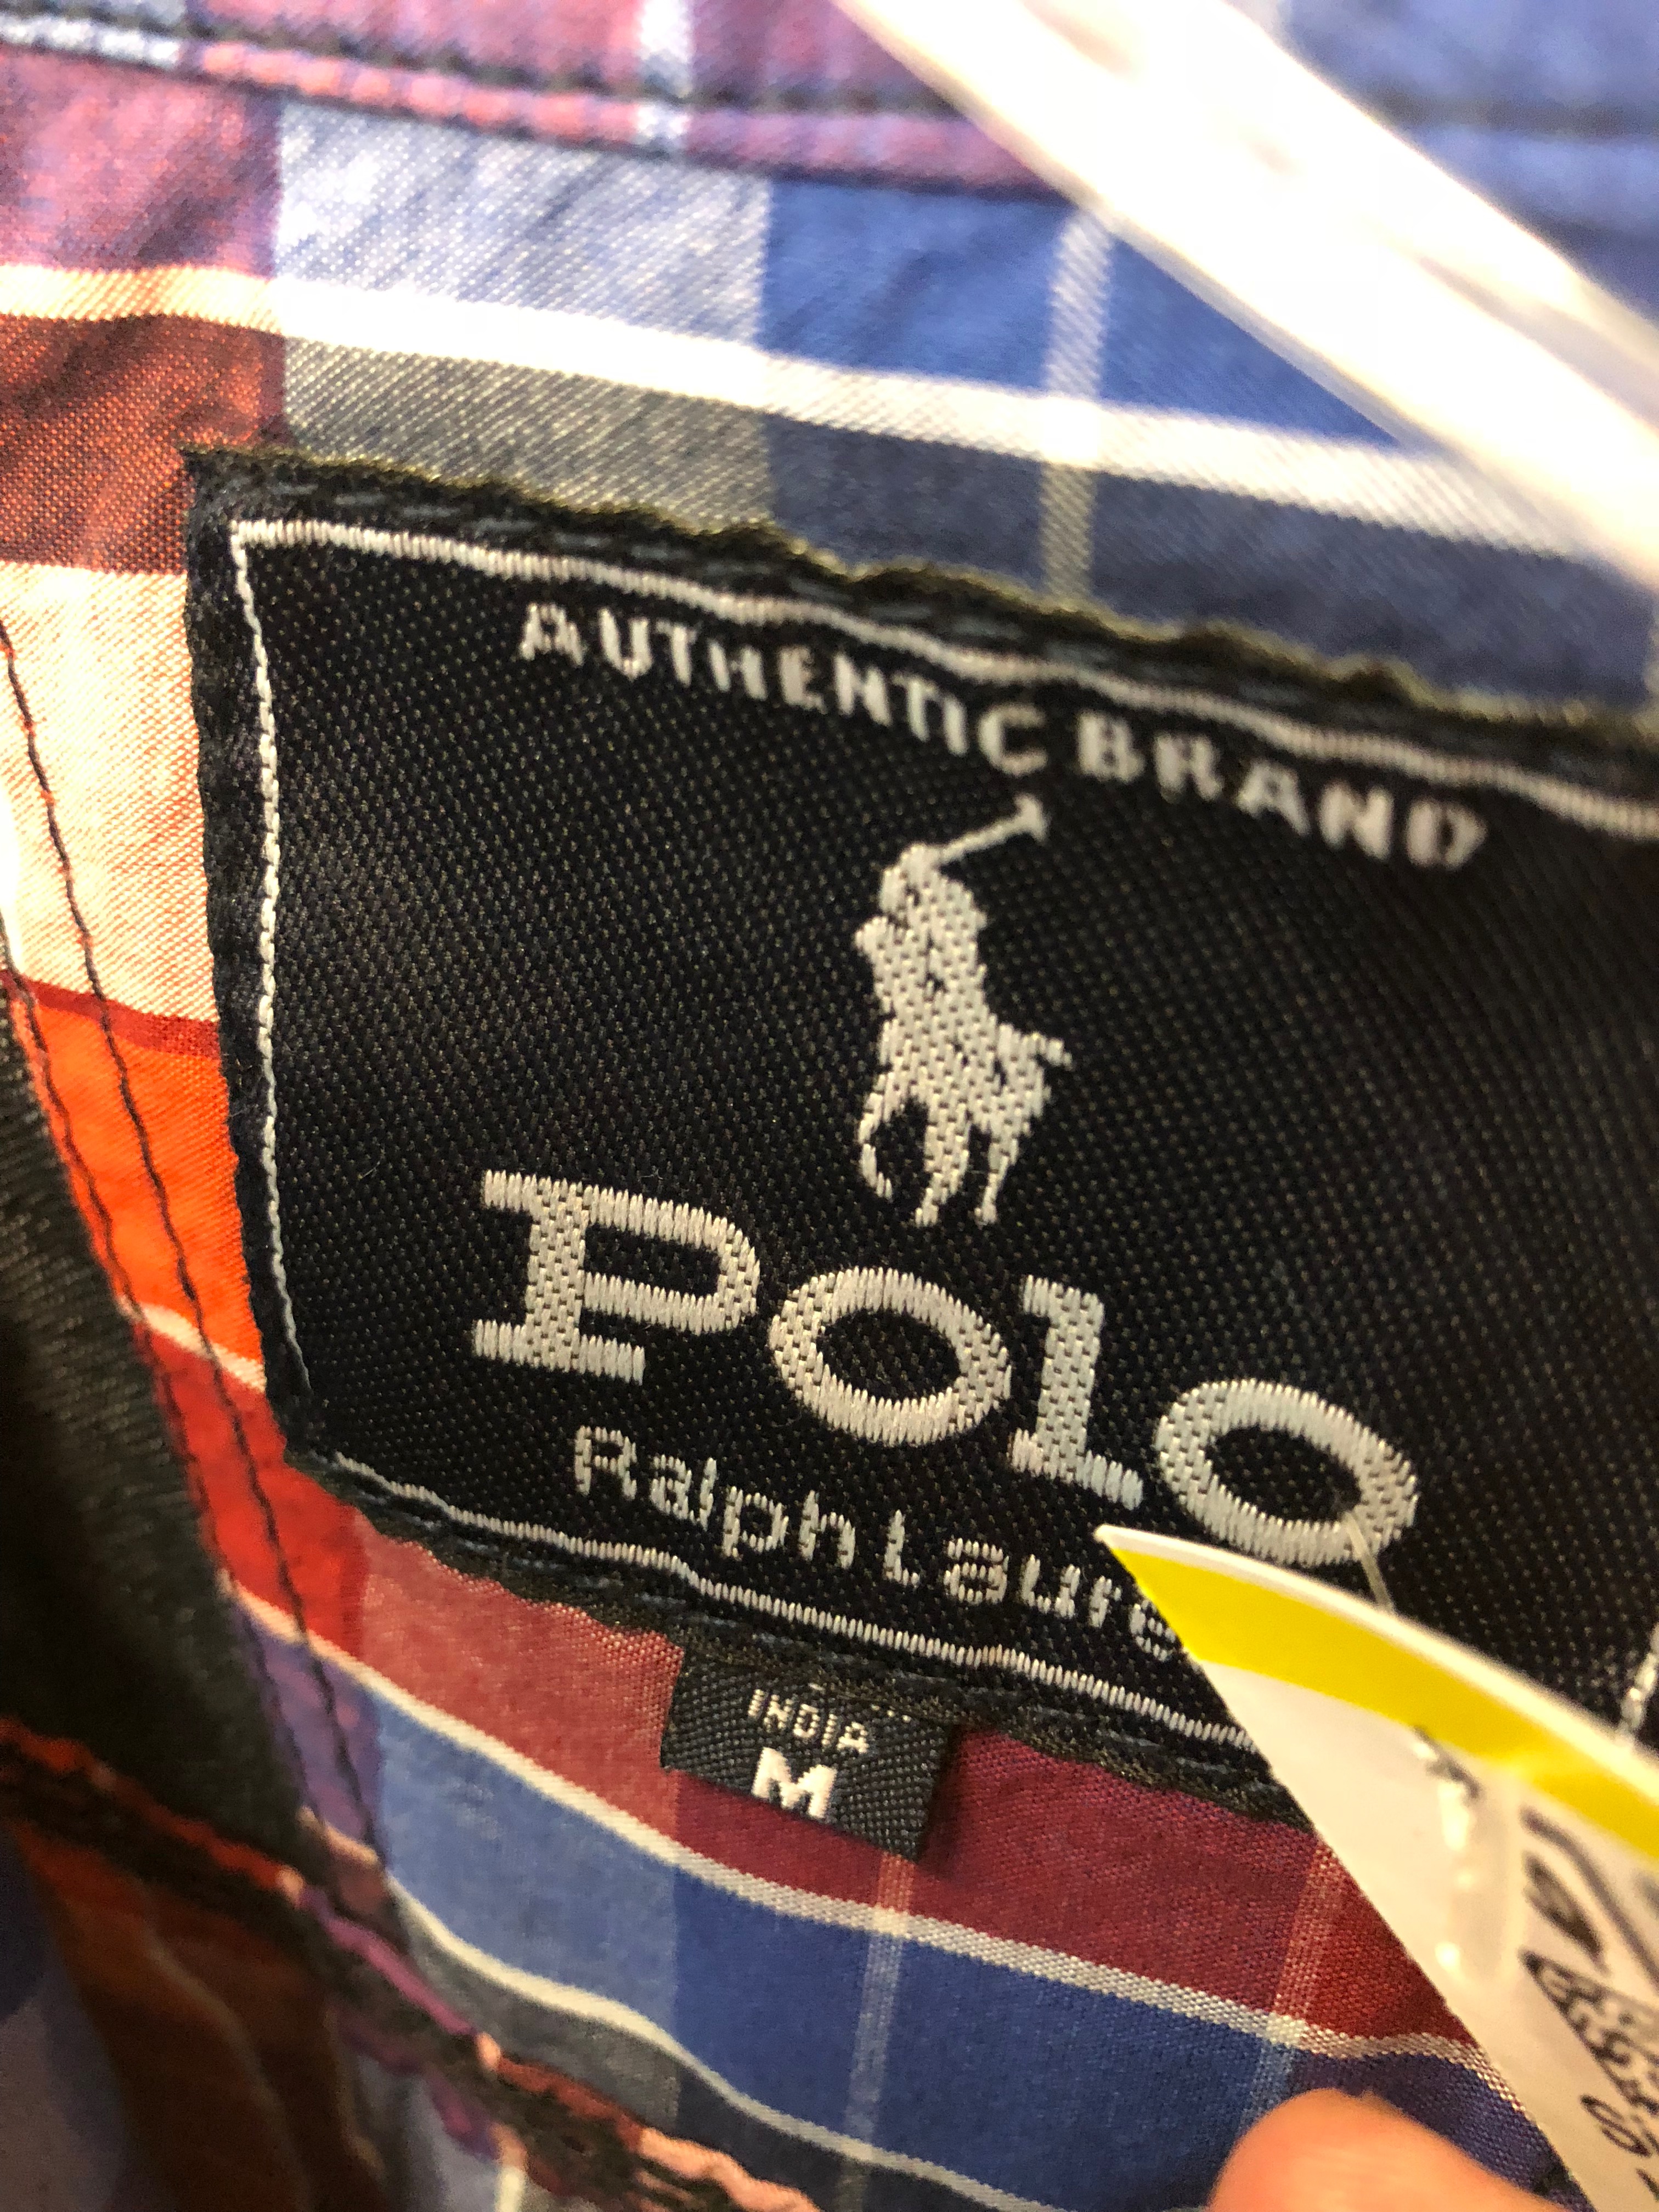 original polo label